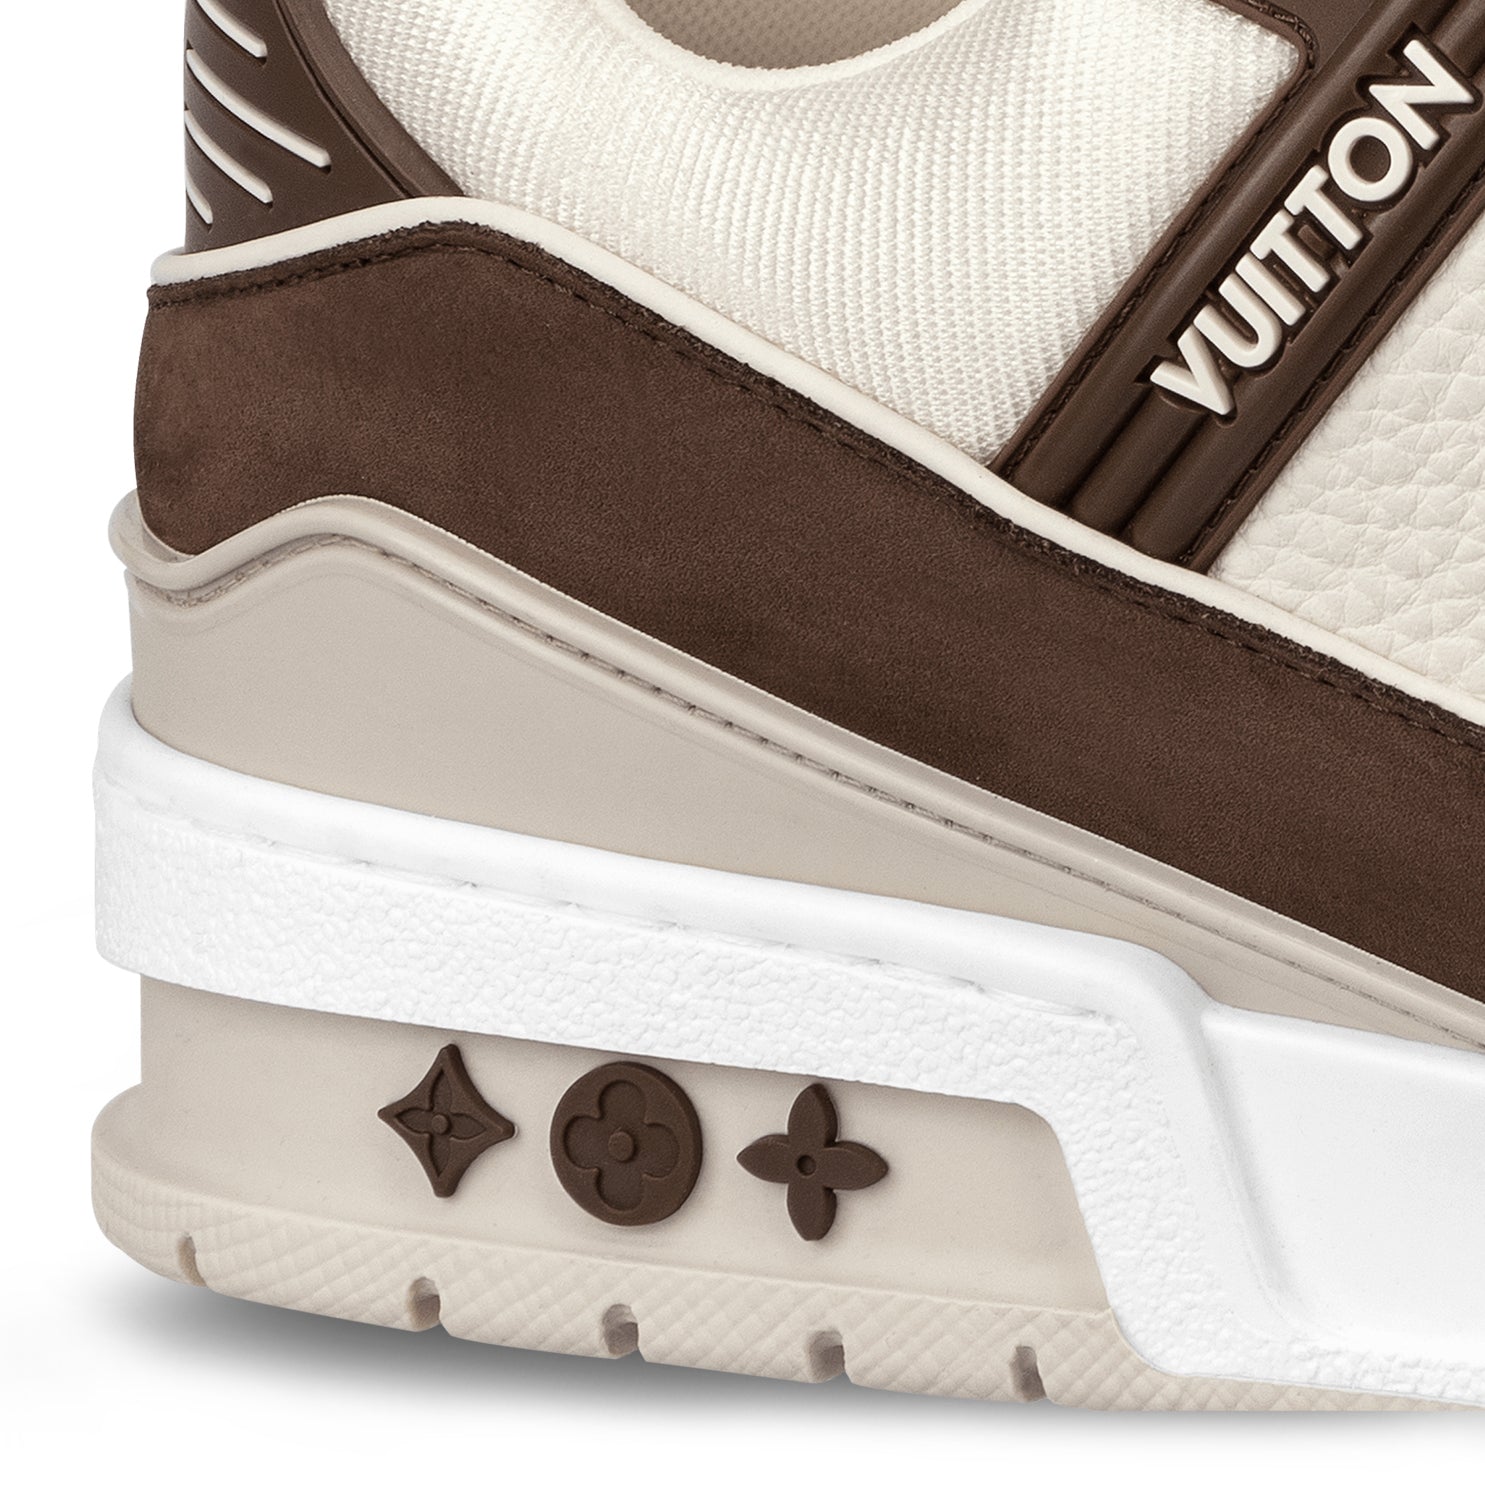 Heel view of Louis Vuitton LV Trainer Calf Leather Moka Sneaker NVPROD4280067V